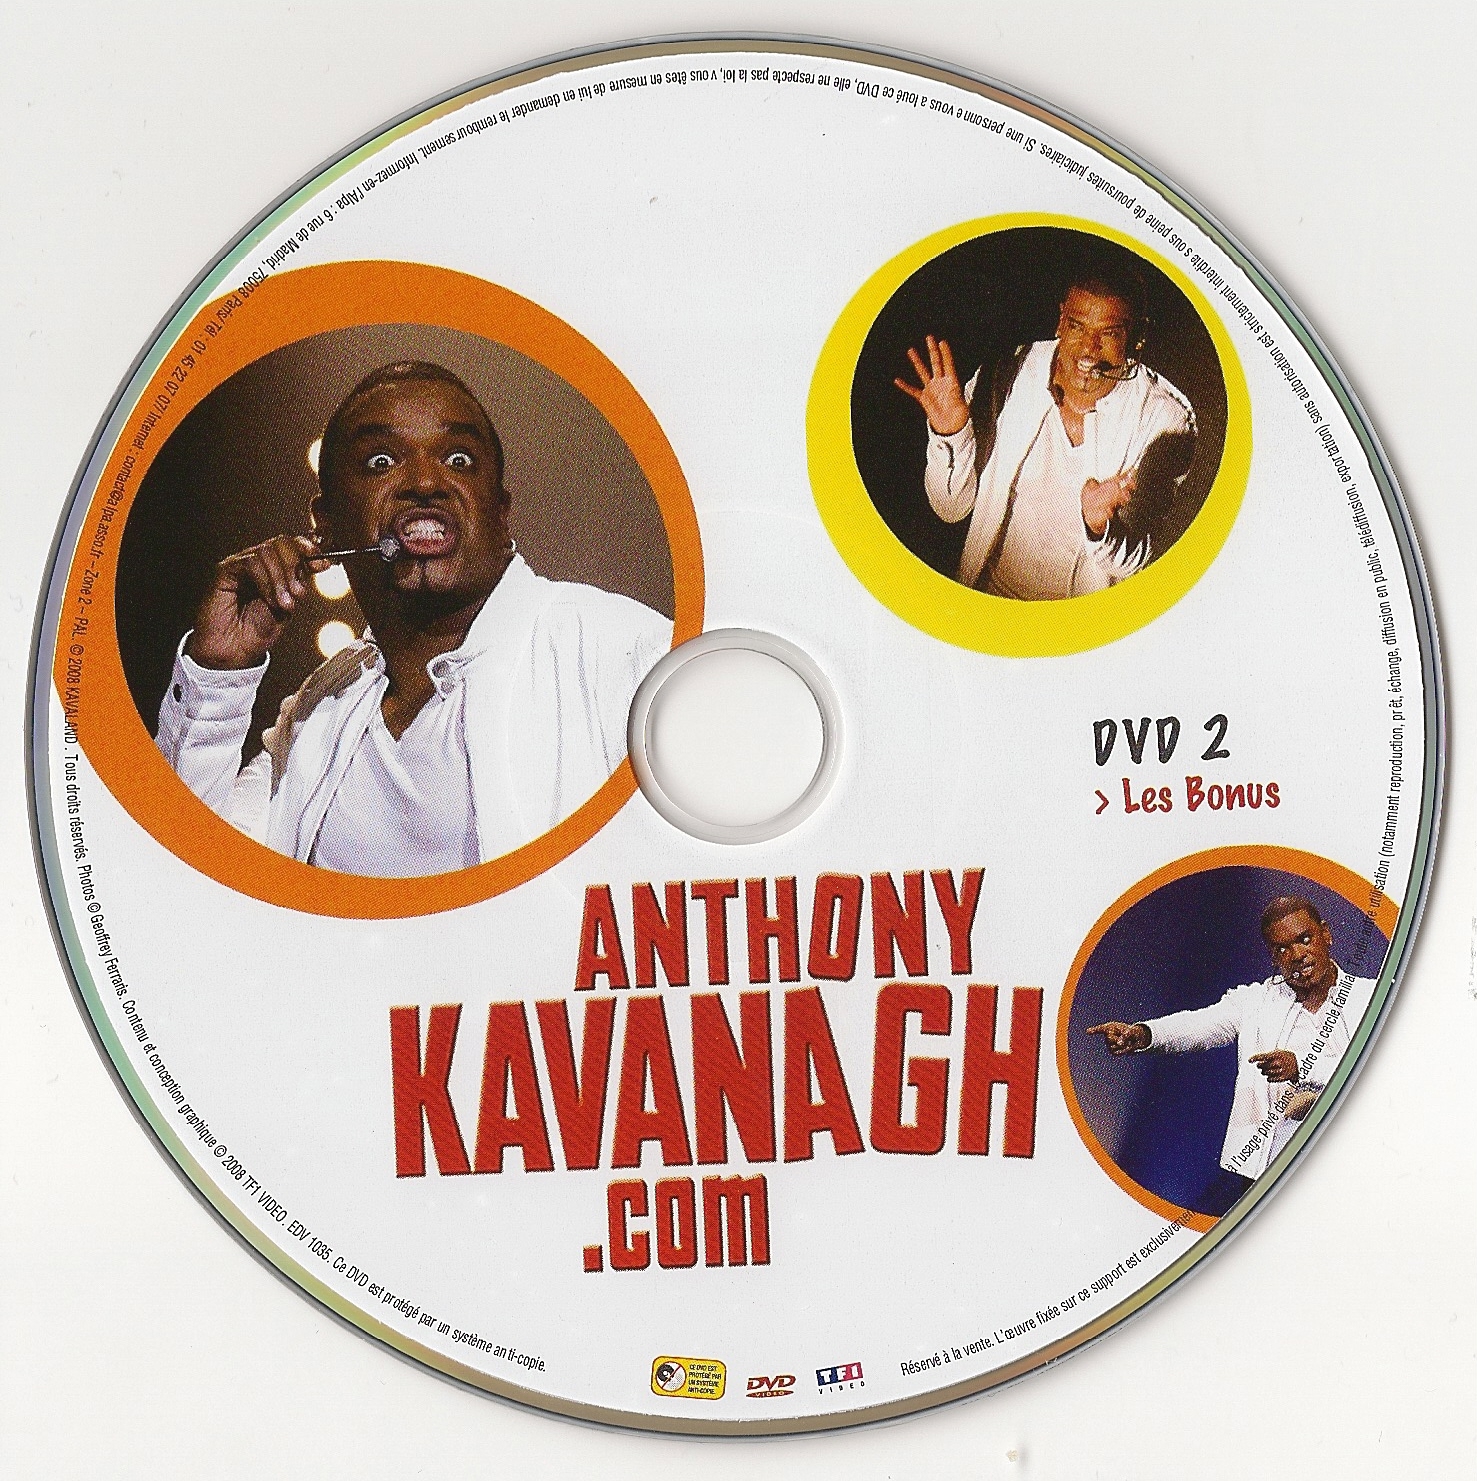 Anthony Kavanagh point com DVD 2